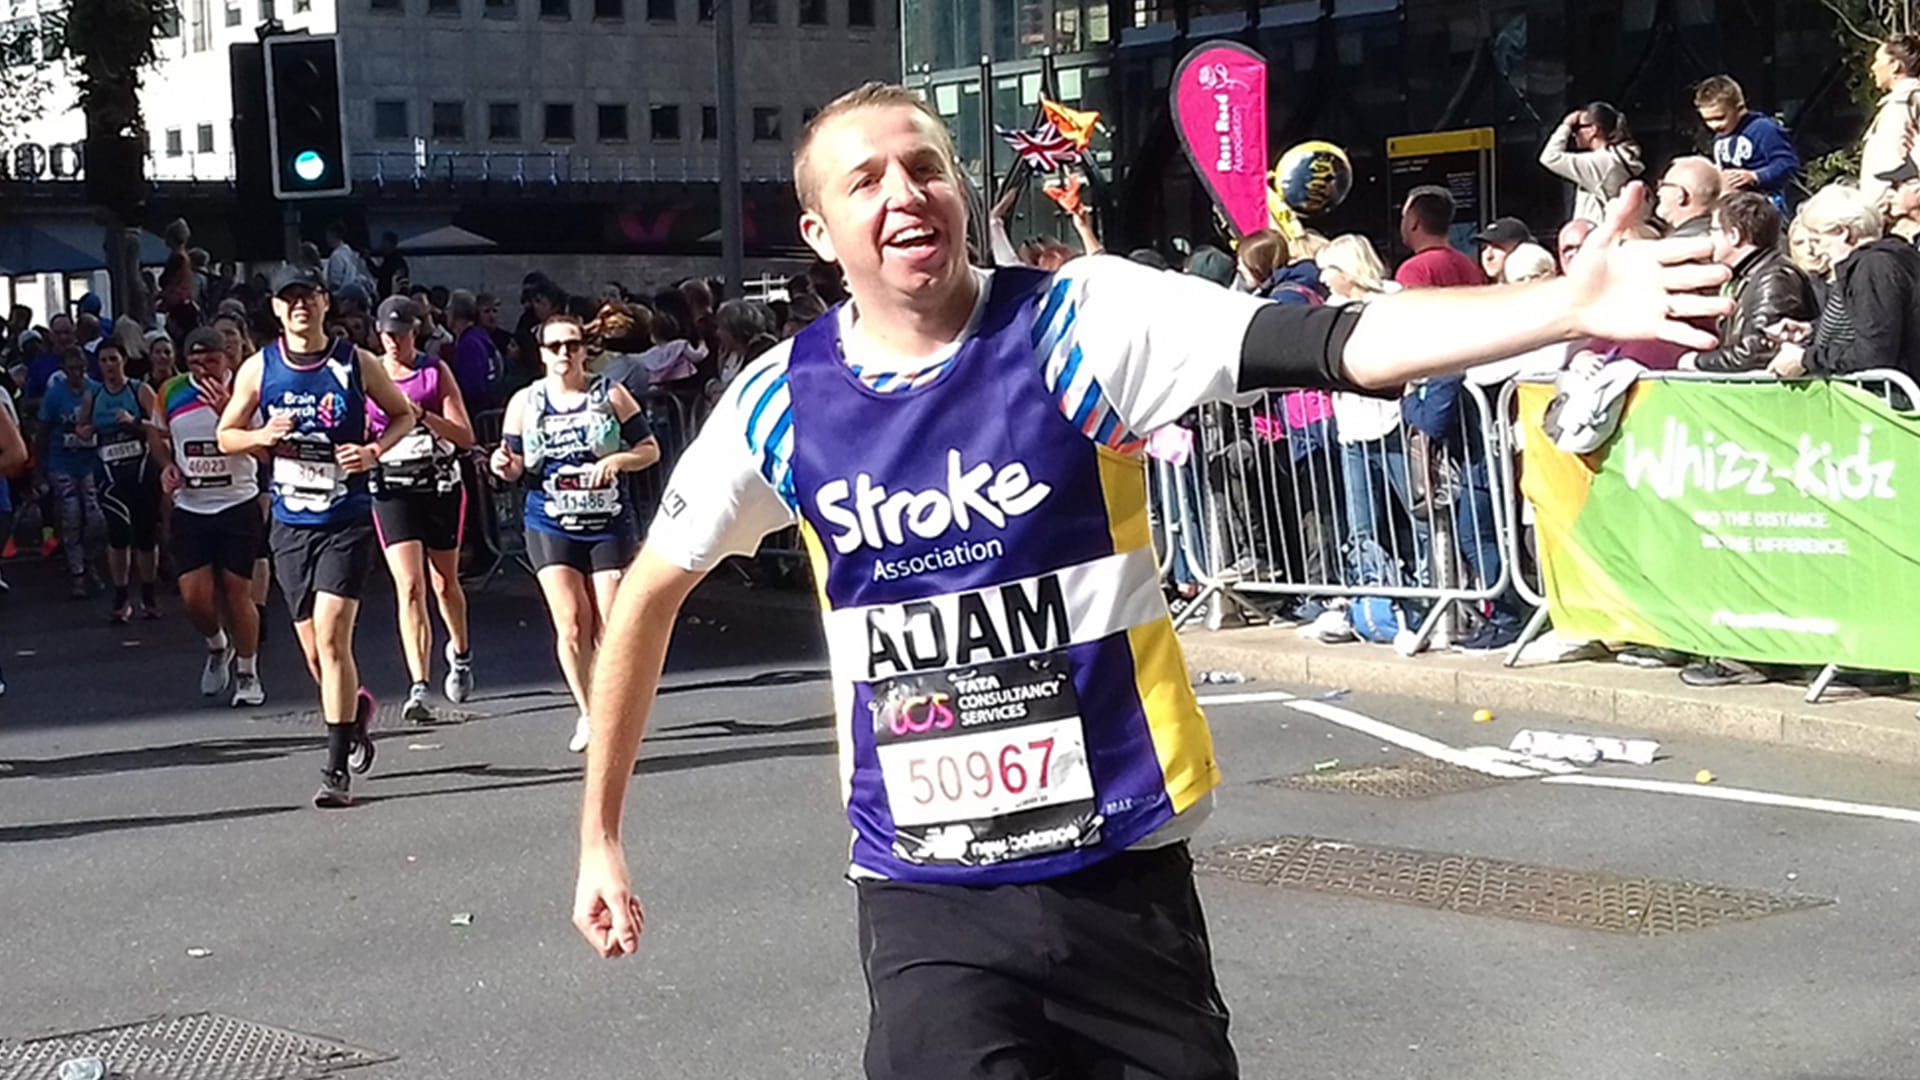 London Marathon participants supporting the Stroke Association